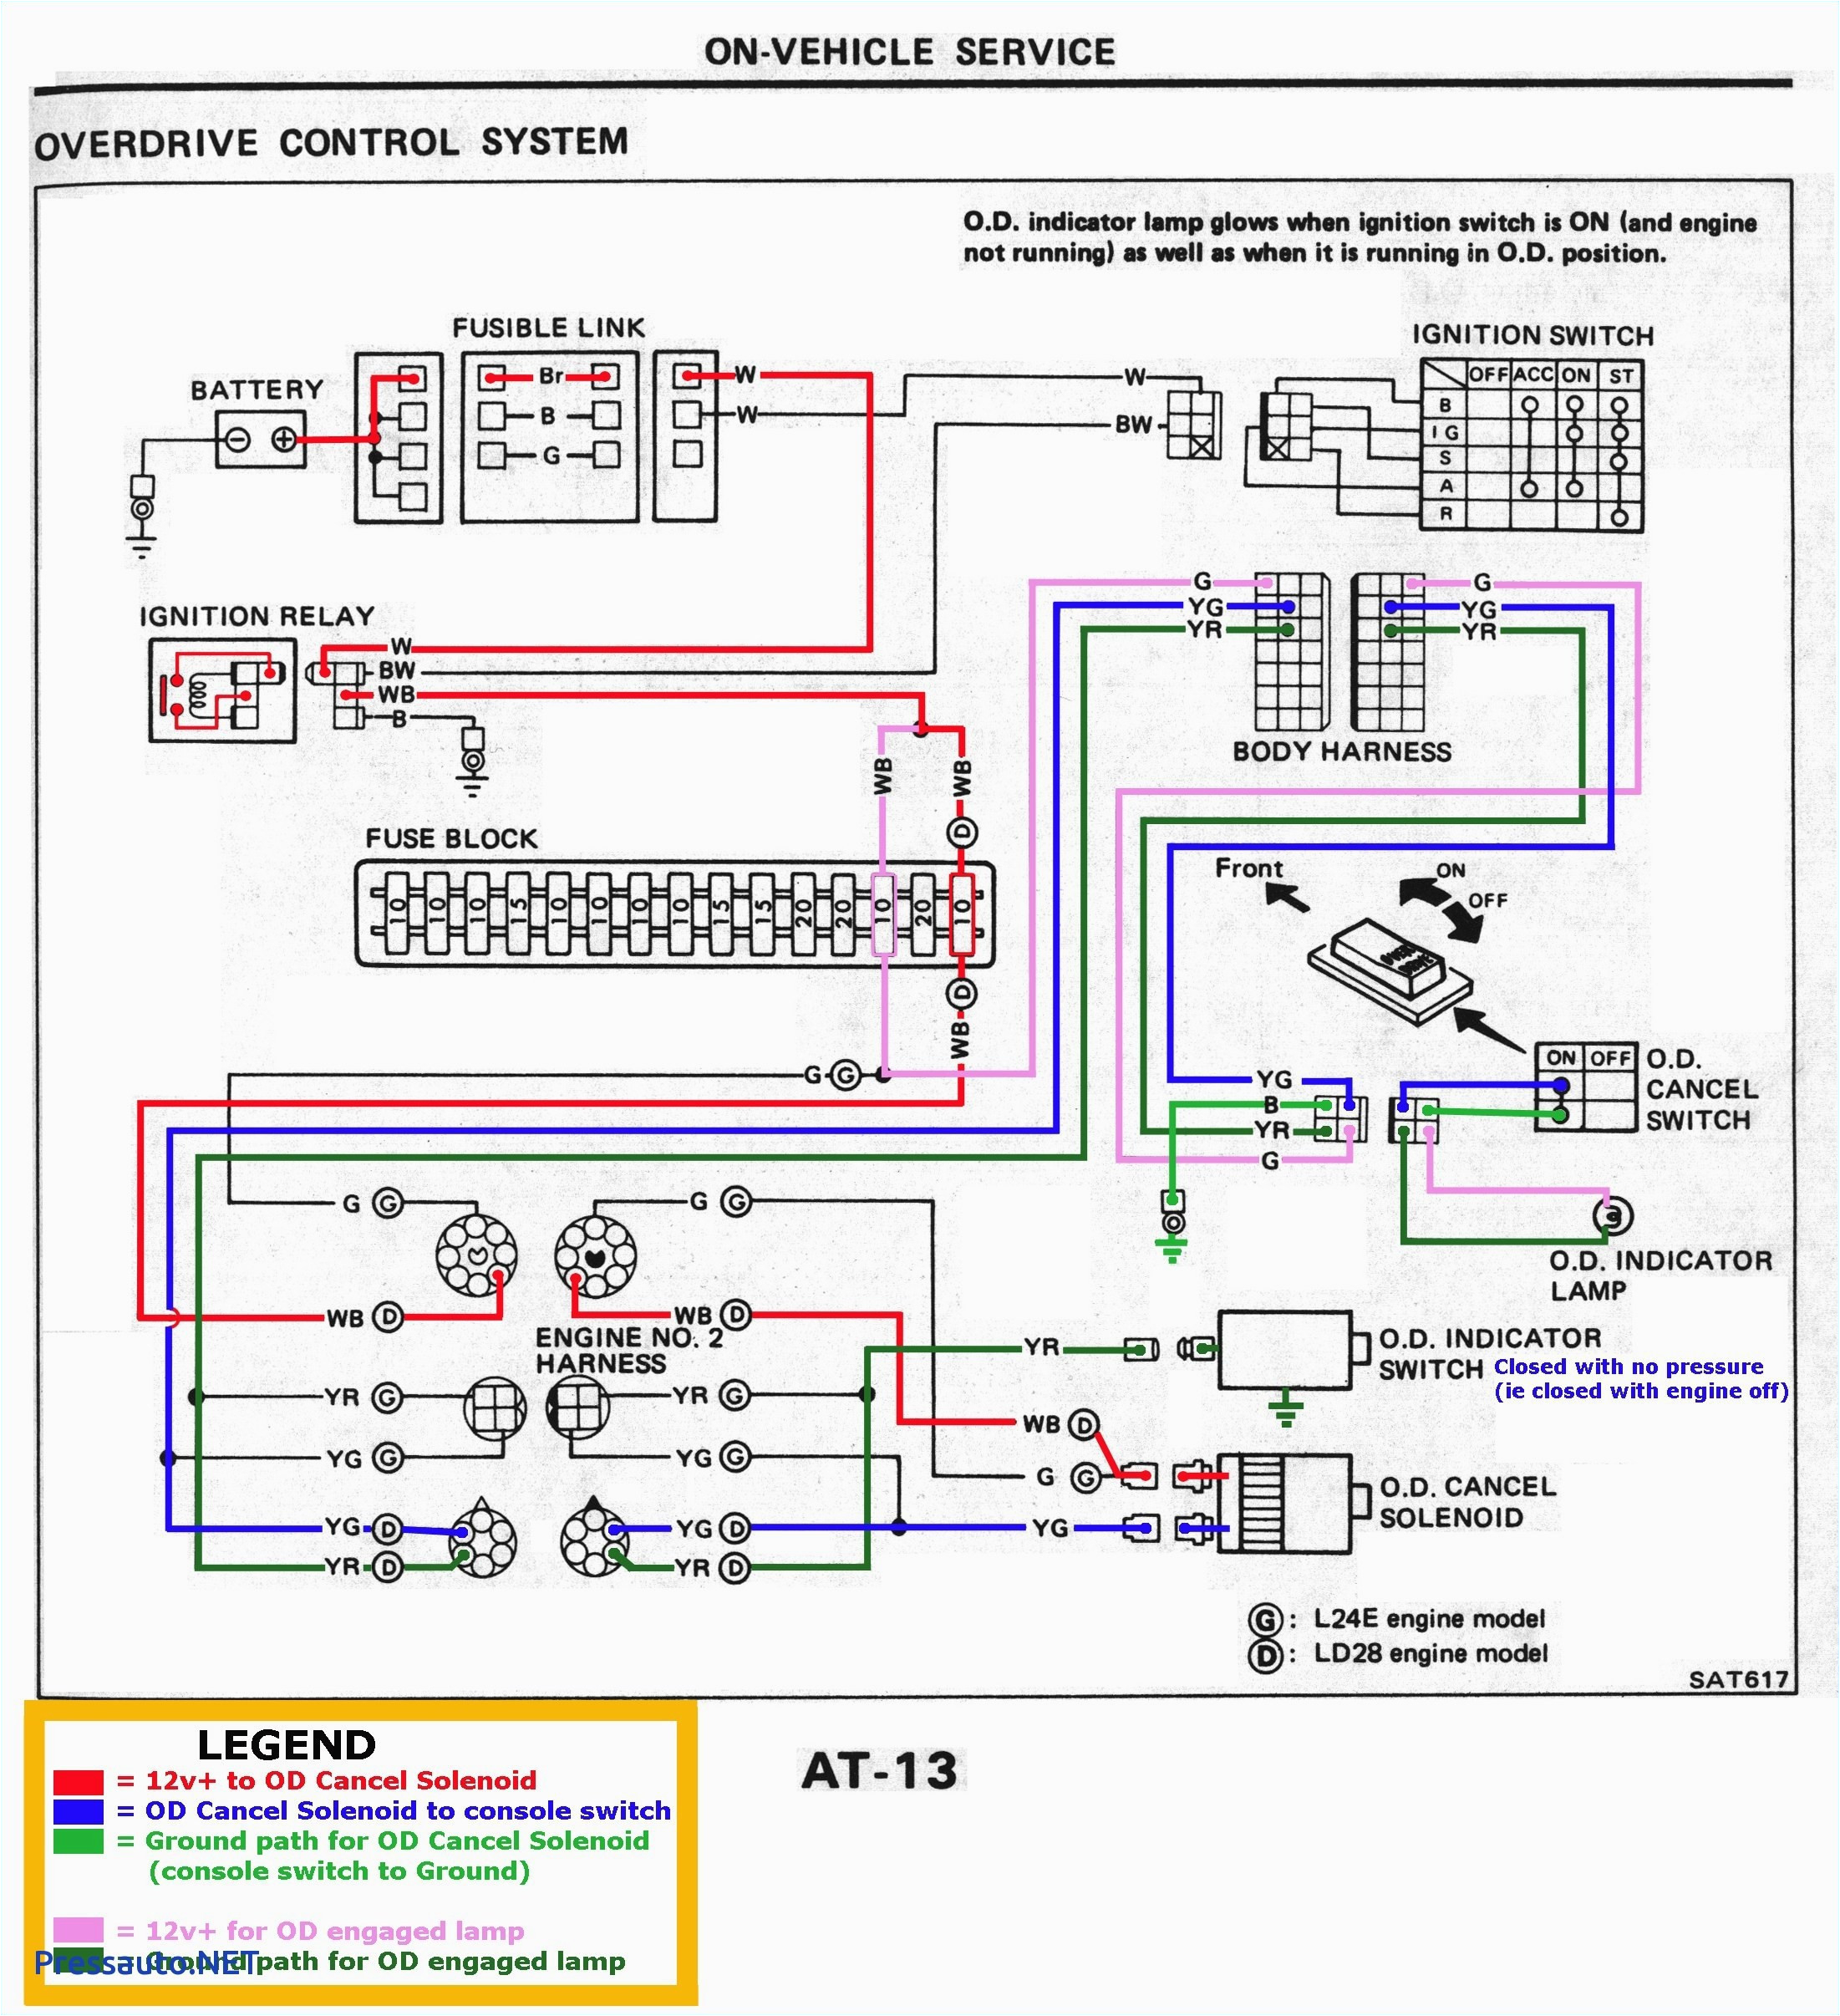 ac delco radio wiring diagram